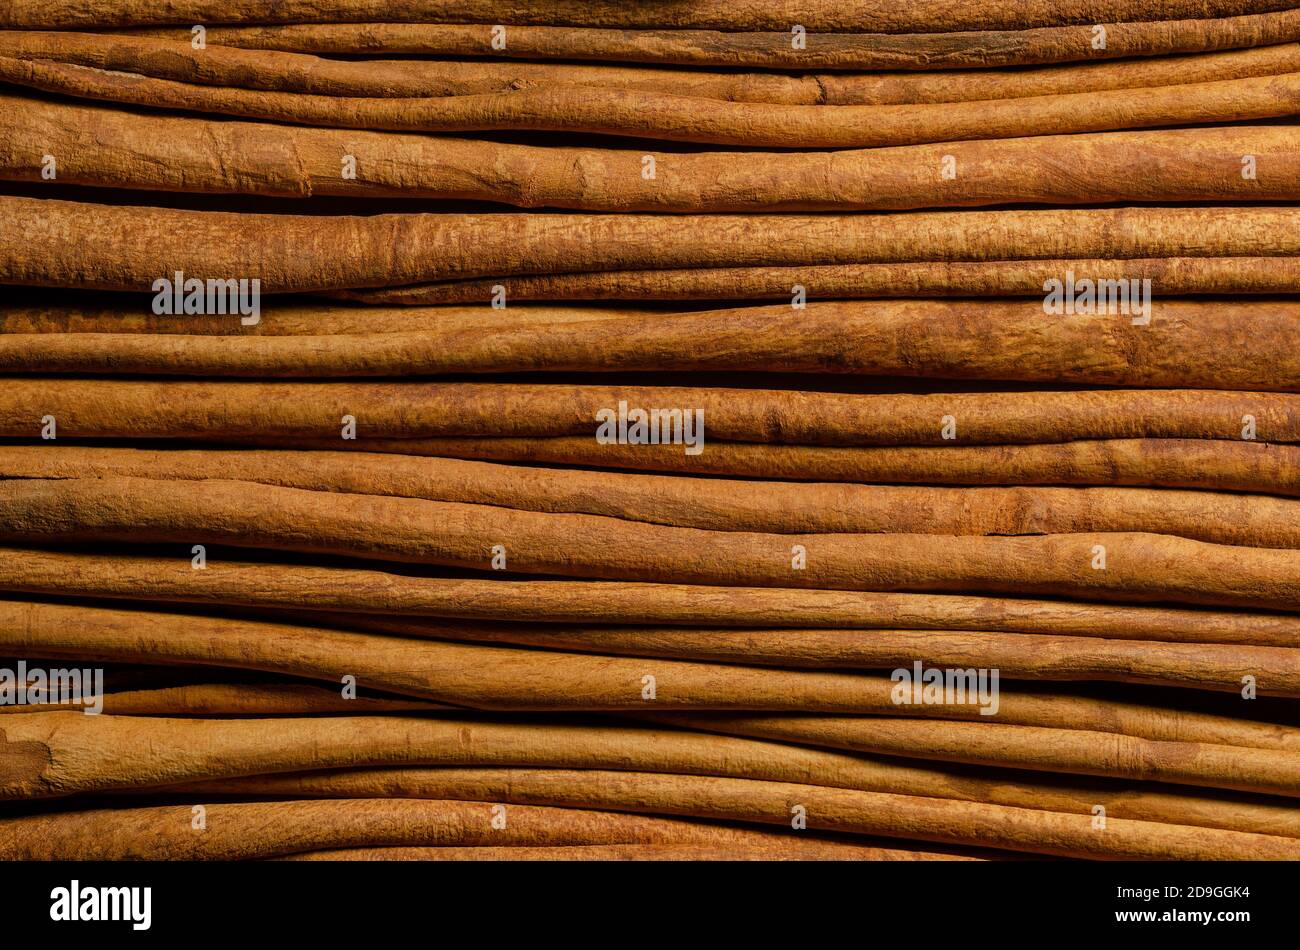 Dried cinnamon bark strips background. A brown spice from the inner bark of Cinnamomum verum, the true cinnamon tree. Aromatic condiment. Stock Photo